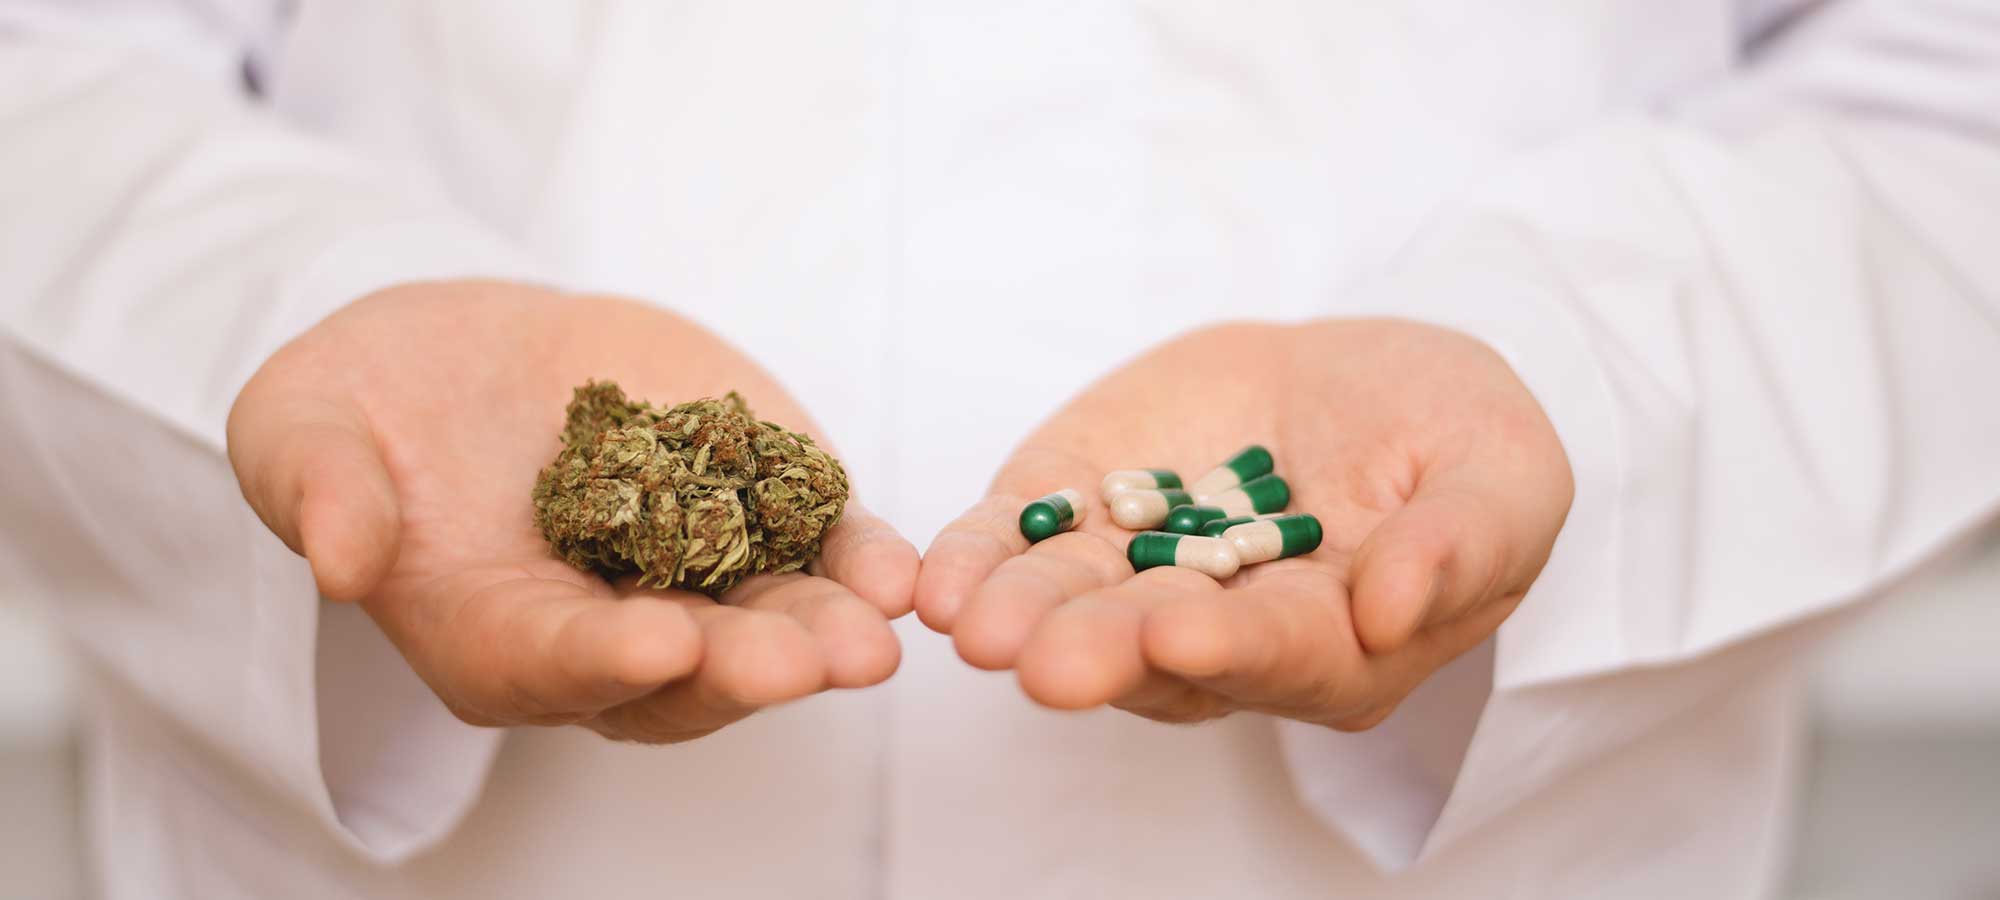 vicodin and marijuana for pain relief